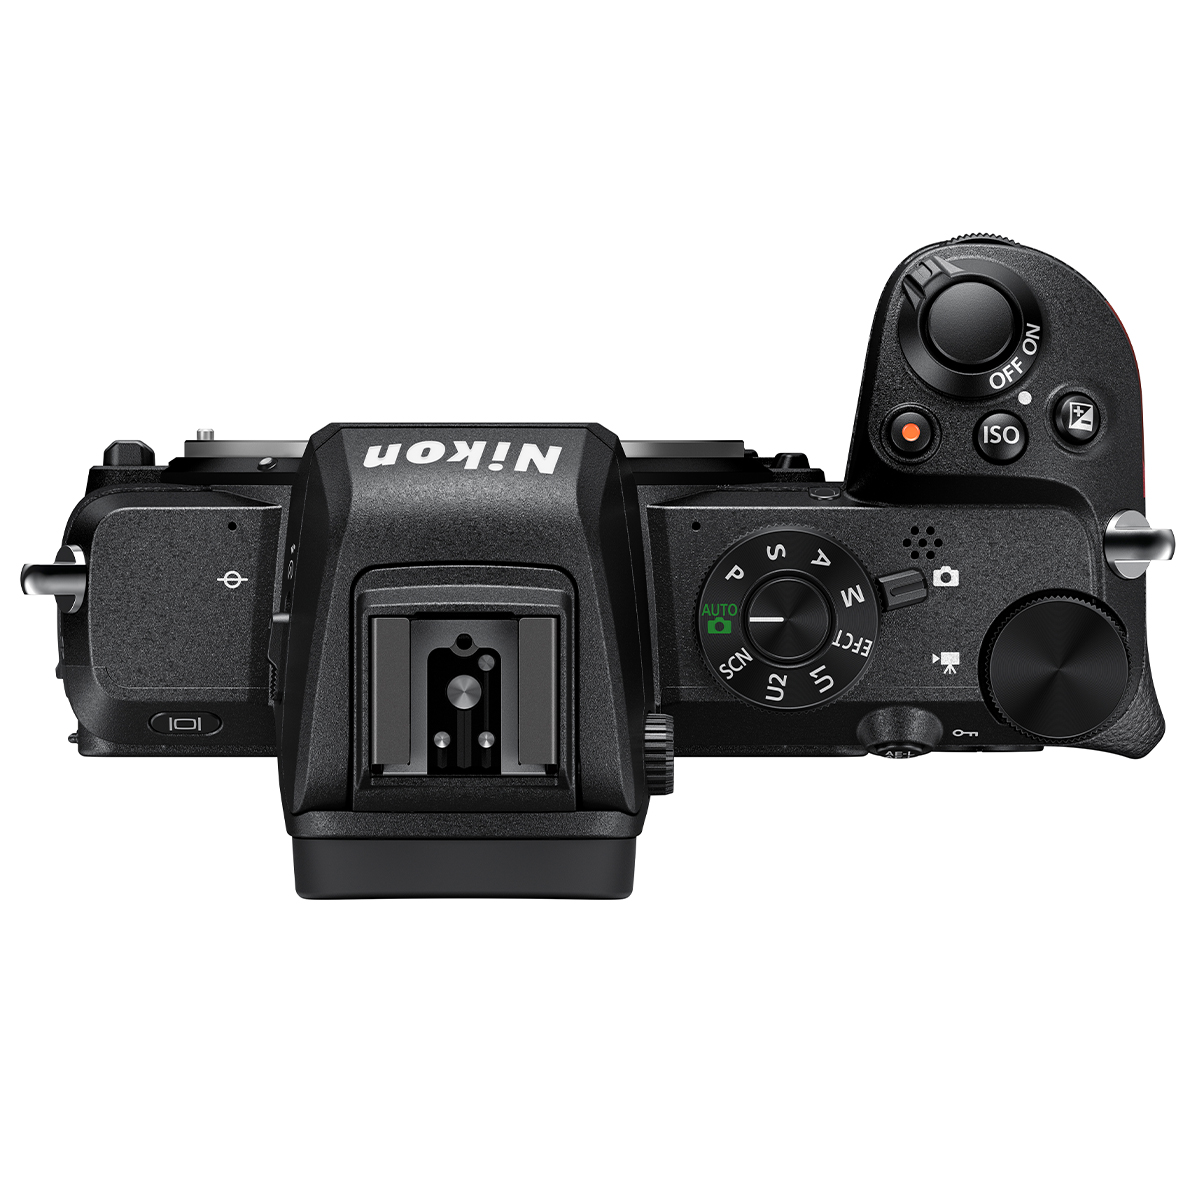 Nikon Z 50 mit 18-140 VR DX